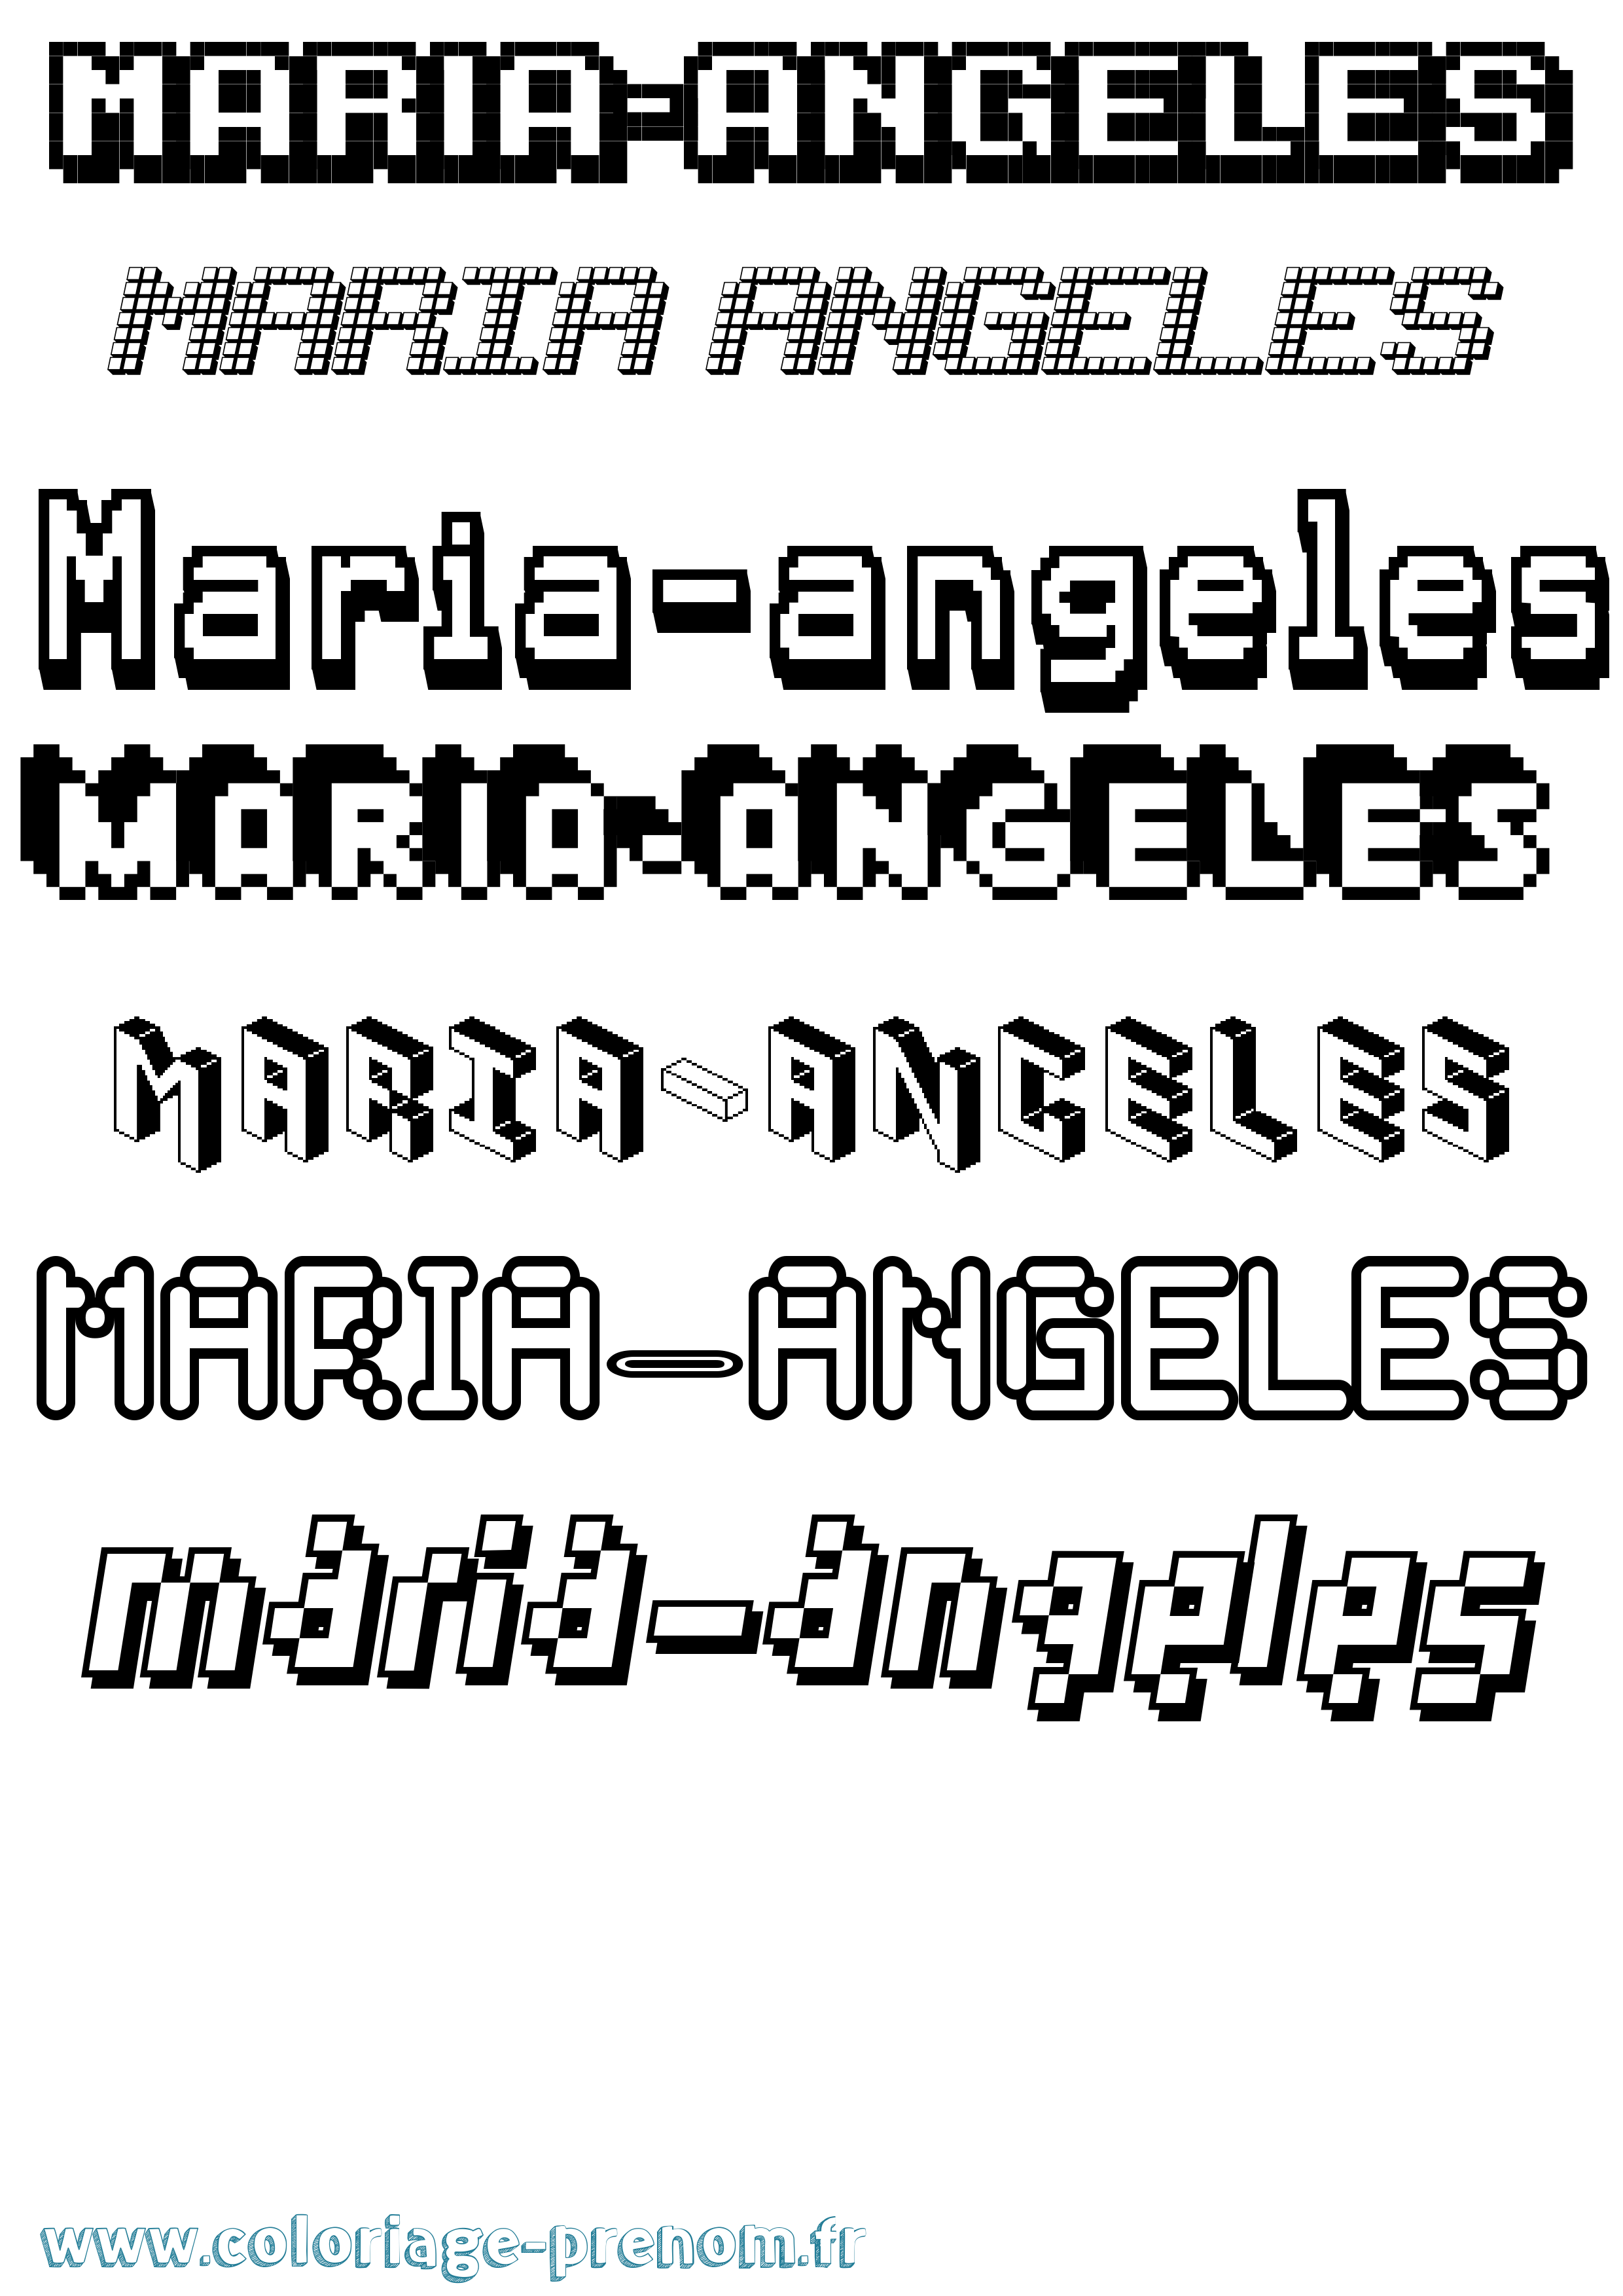 Coloriage prénom Maria-Angeles Pixel